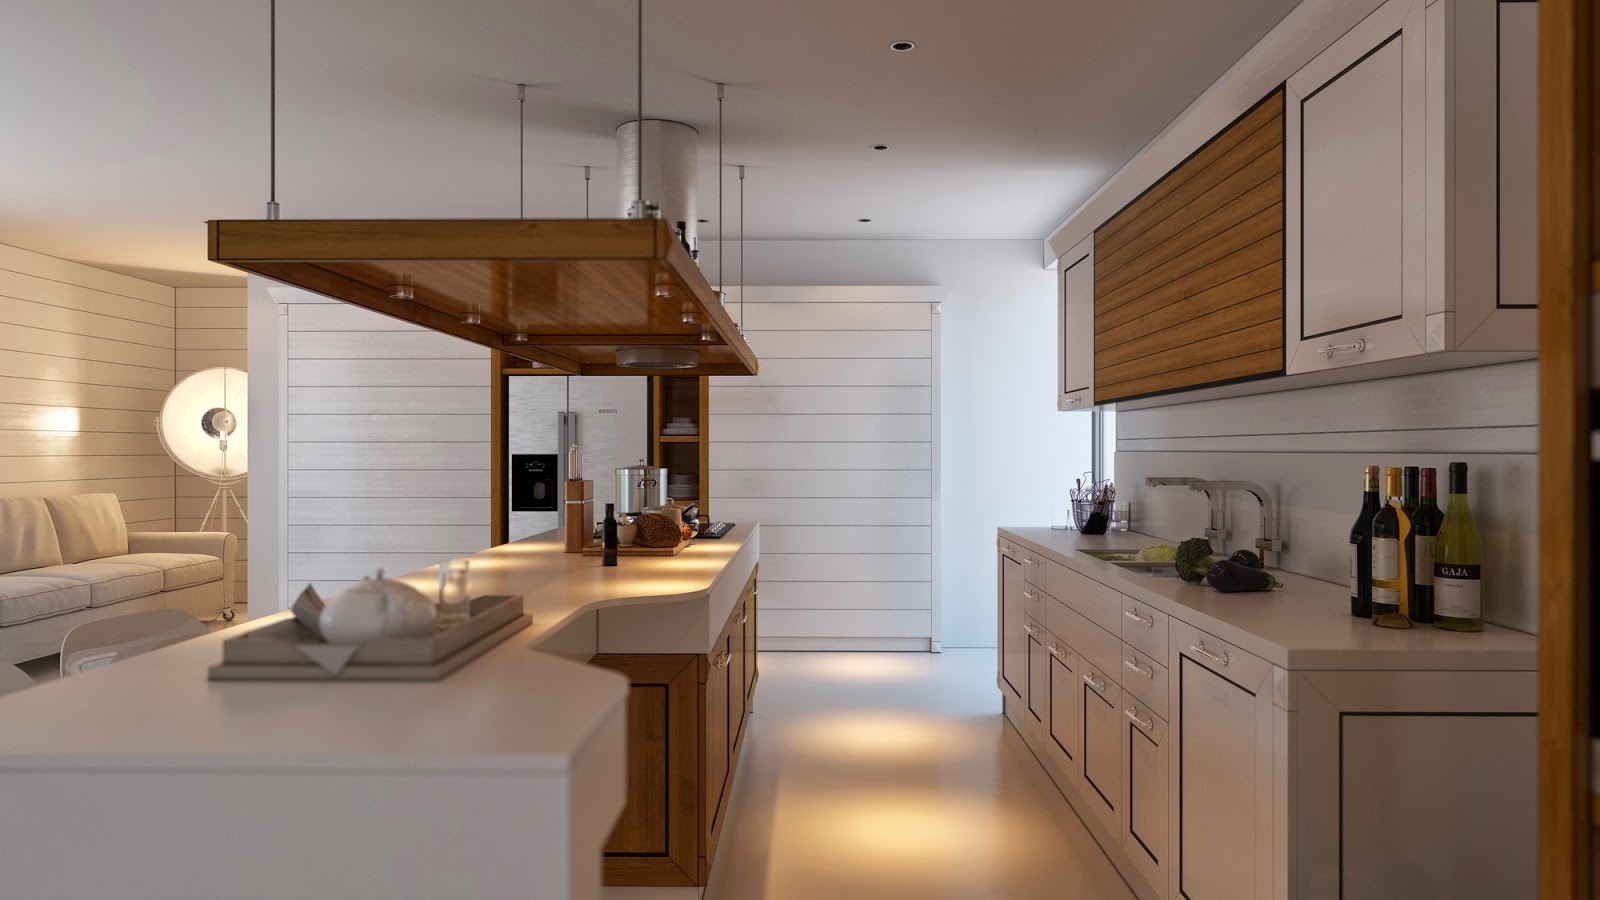 Ideas for minimalist kitchen design "width =" 1600 "height =" 900 "srcset =" https://mileray.com/wp-content/uploads/2020/05/1588512716_378_2-Minimalist-Kitchen-Design-That-Will-Stunning-You-By-Artem.jpeg 1600w, https: / /mileray.com/wp-content/uploads/2016/06/8-Suspended-cooker-hood-300x169.jpeg 300w, https://mileray.com/wp-content/uploads/2016/06/8-Suspended- Cooker-Hood-768x432.jpeg 768w, https://mileray.com/wp-content/uploads/2016/06/8-Suspended-cooker-hood-1024x576.jpeg 1024w, https://mileray.com/wp- content / uploads / 2016/06 / 8-Suspended-Cooker-Hood-696x392.jpeg 696w, https://mileray.com/wp-content/uploads/2016/06/8-Suspended-cooker-hood-1068x601.jpeg 1068w, https://mileray.com/wp-content/uploads/2016/06/8-Suspended-cooker-hood-747x420.jpeg 747w "sizes =" (maximum width: 1600px) 100vw, 1600px